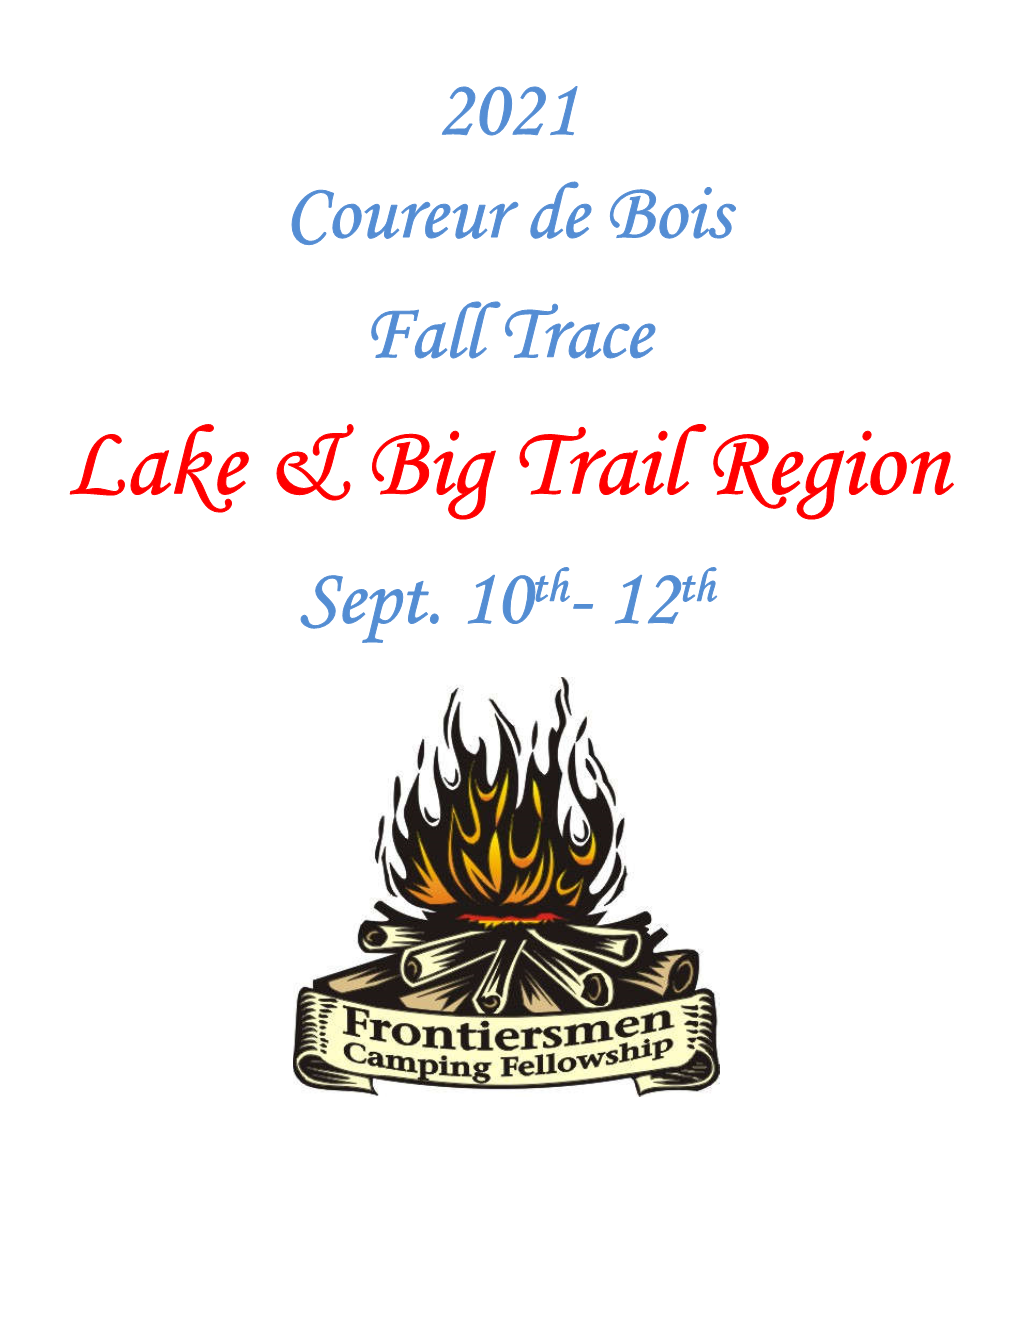 Lake & Big Trail Region